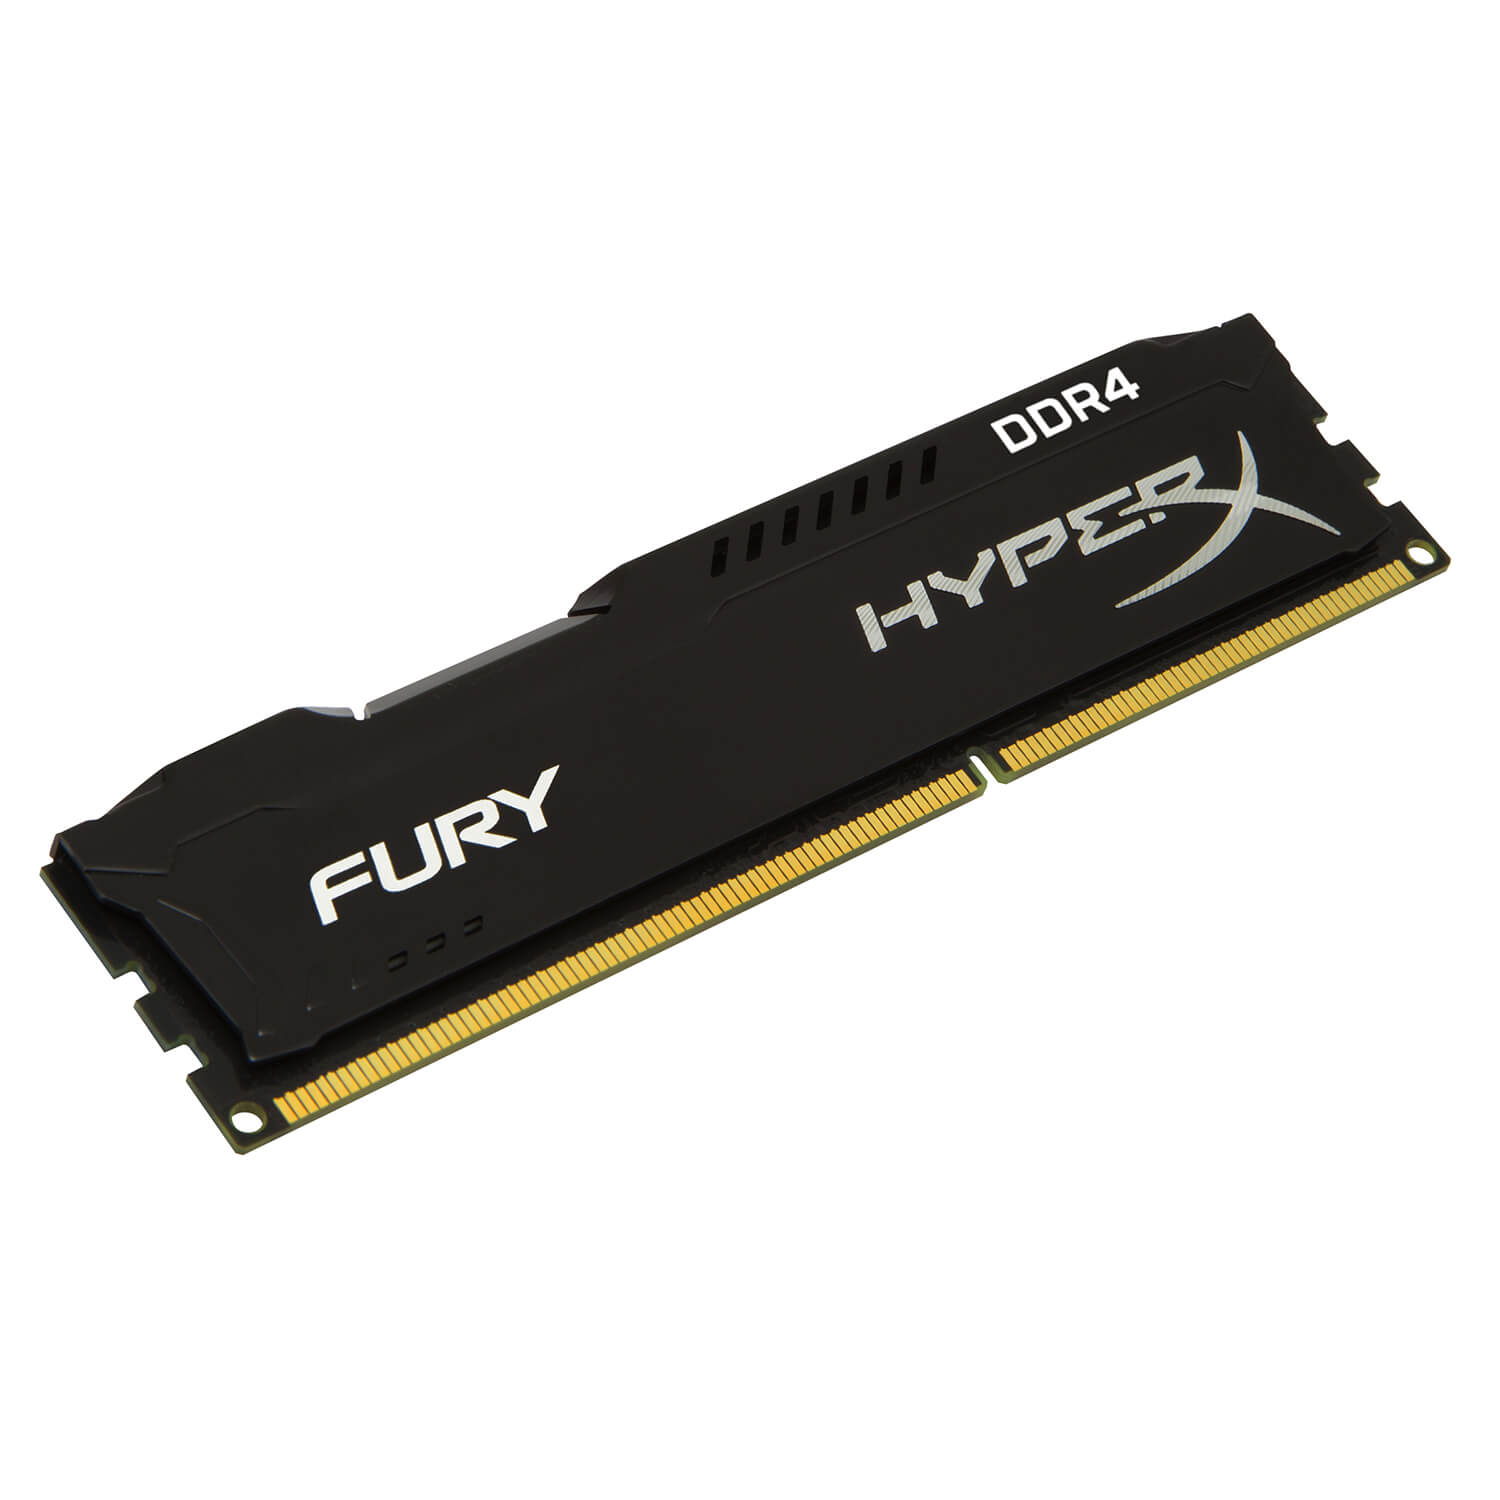  Memorie Kingston HyperX Fury HX424C15FB/8, 8GB, DDR4, 2400MHz, CL15 